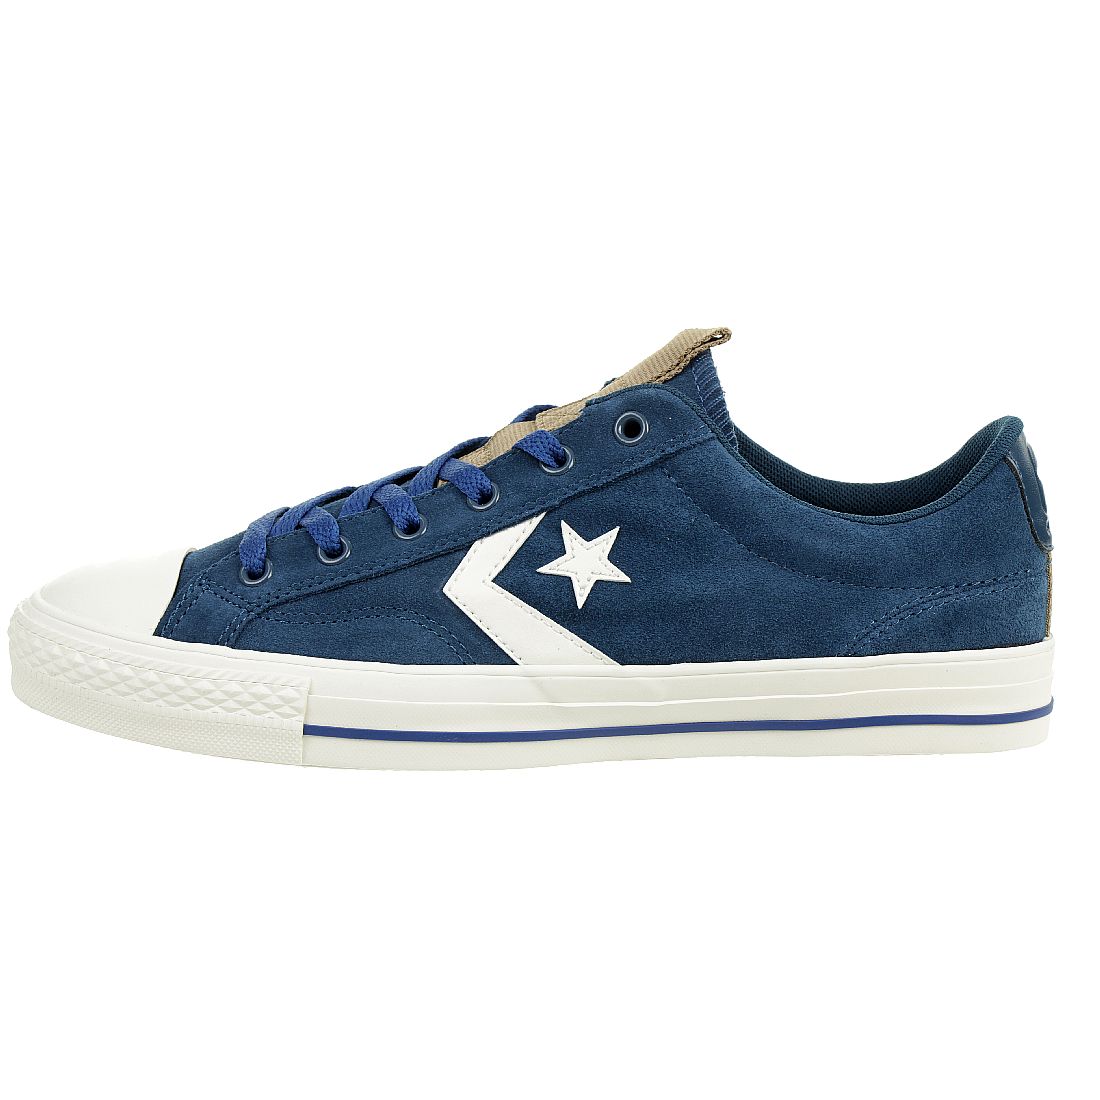 Converse STAR PLAYER OX Schuhe Sneaker Wildleder blau 162569C Gr.36,5